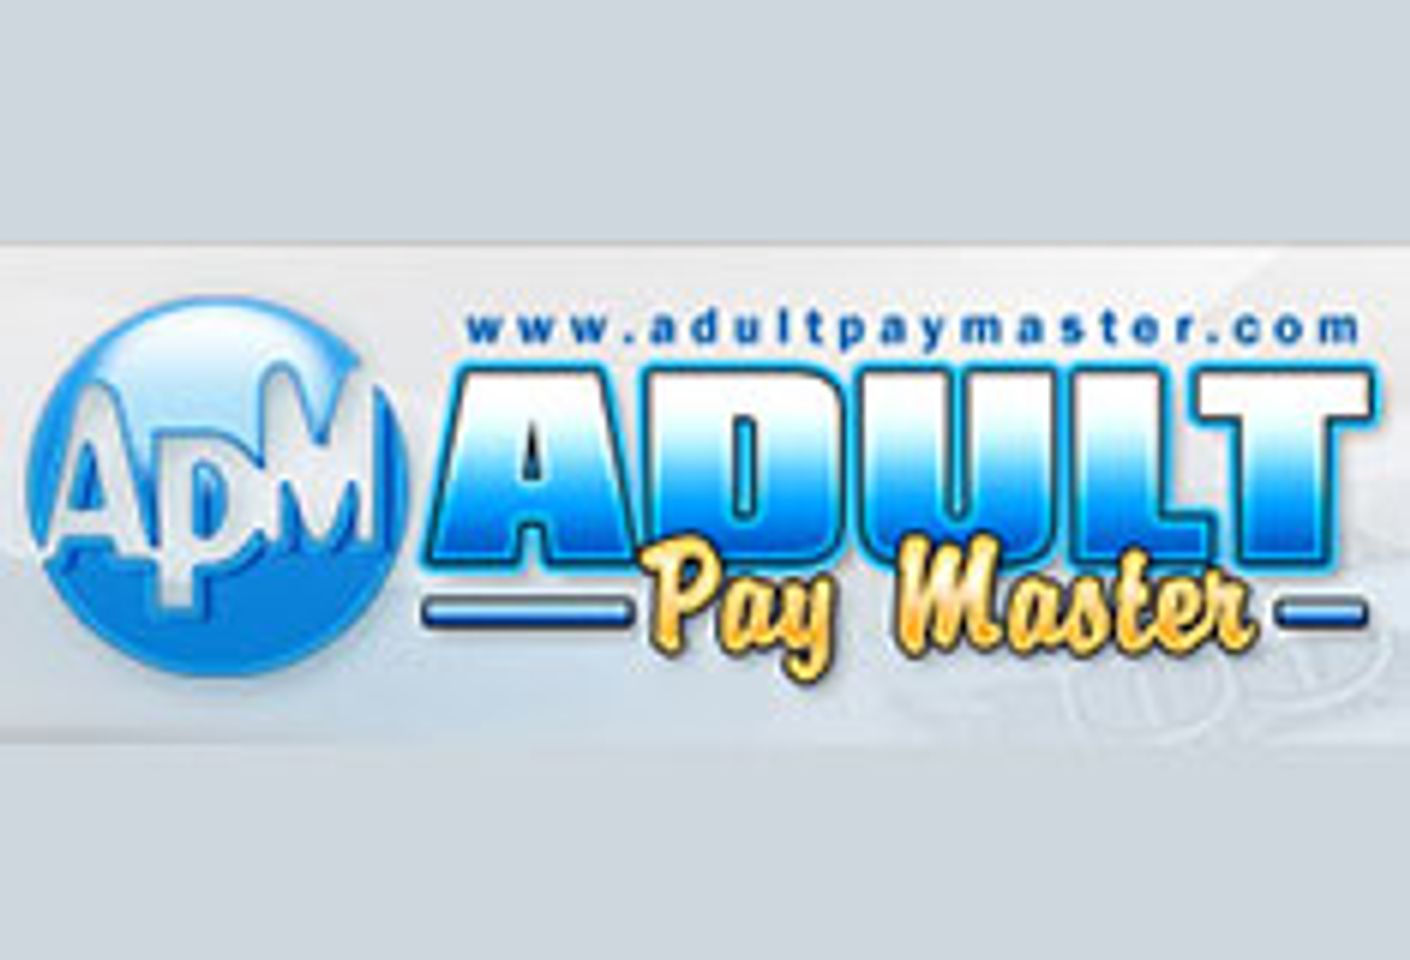 AdultPayMaster Version 4.0 Unveiled